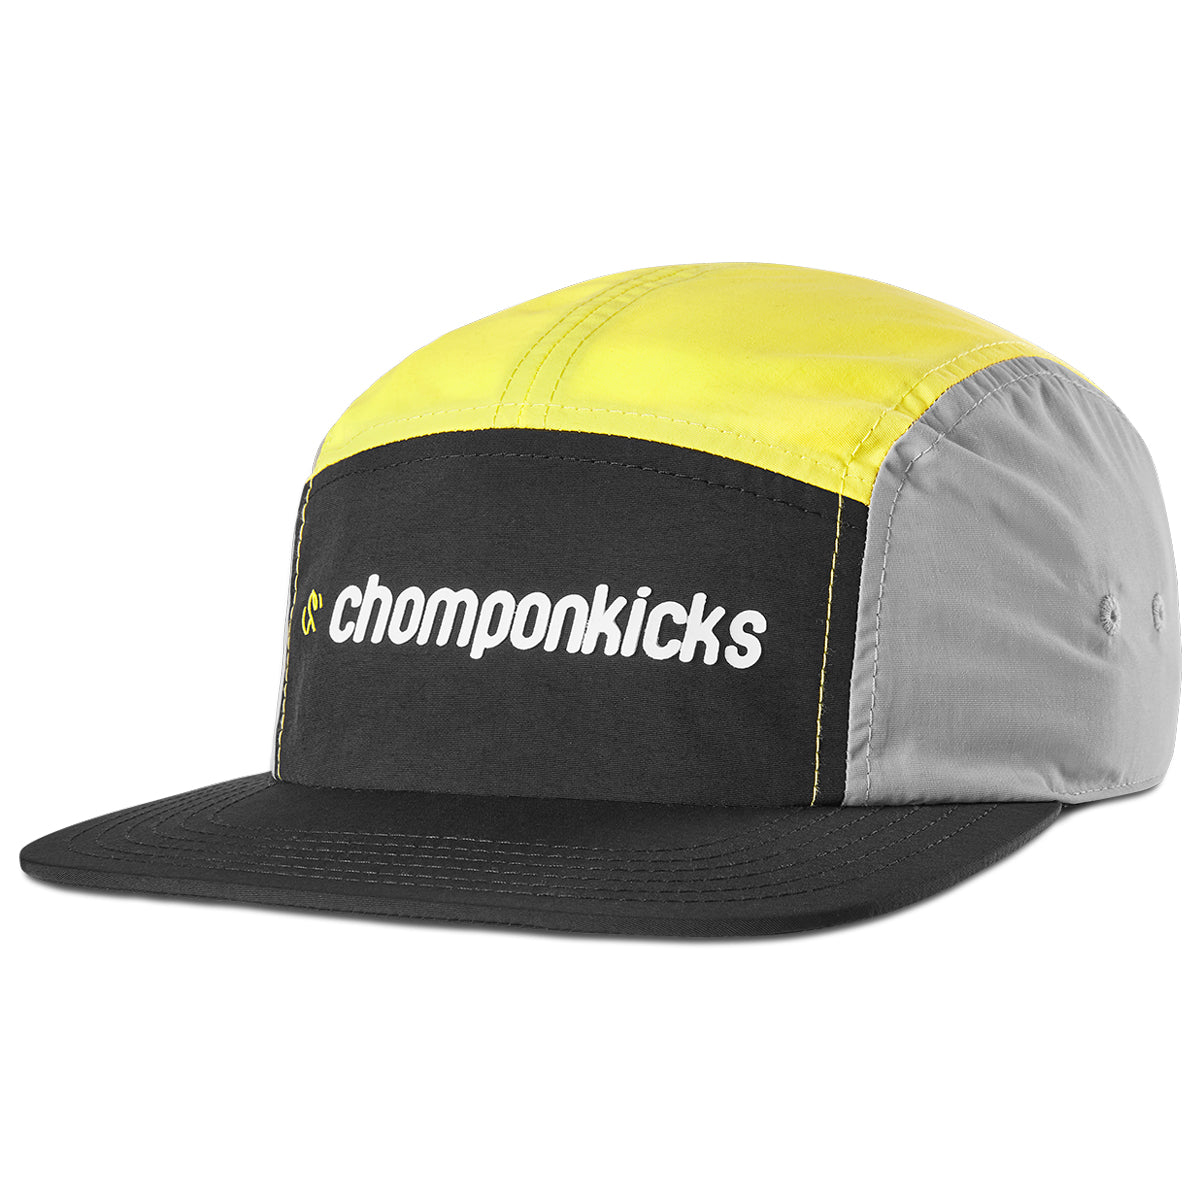 eS Chomp Camper Hat - Black/Yellow image 1